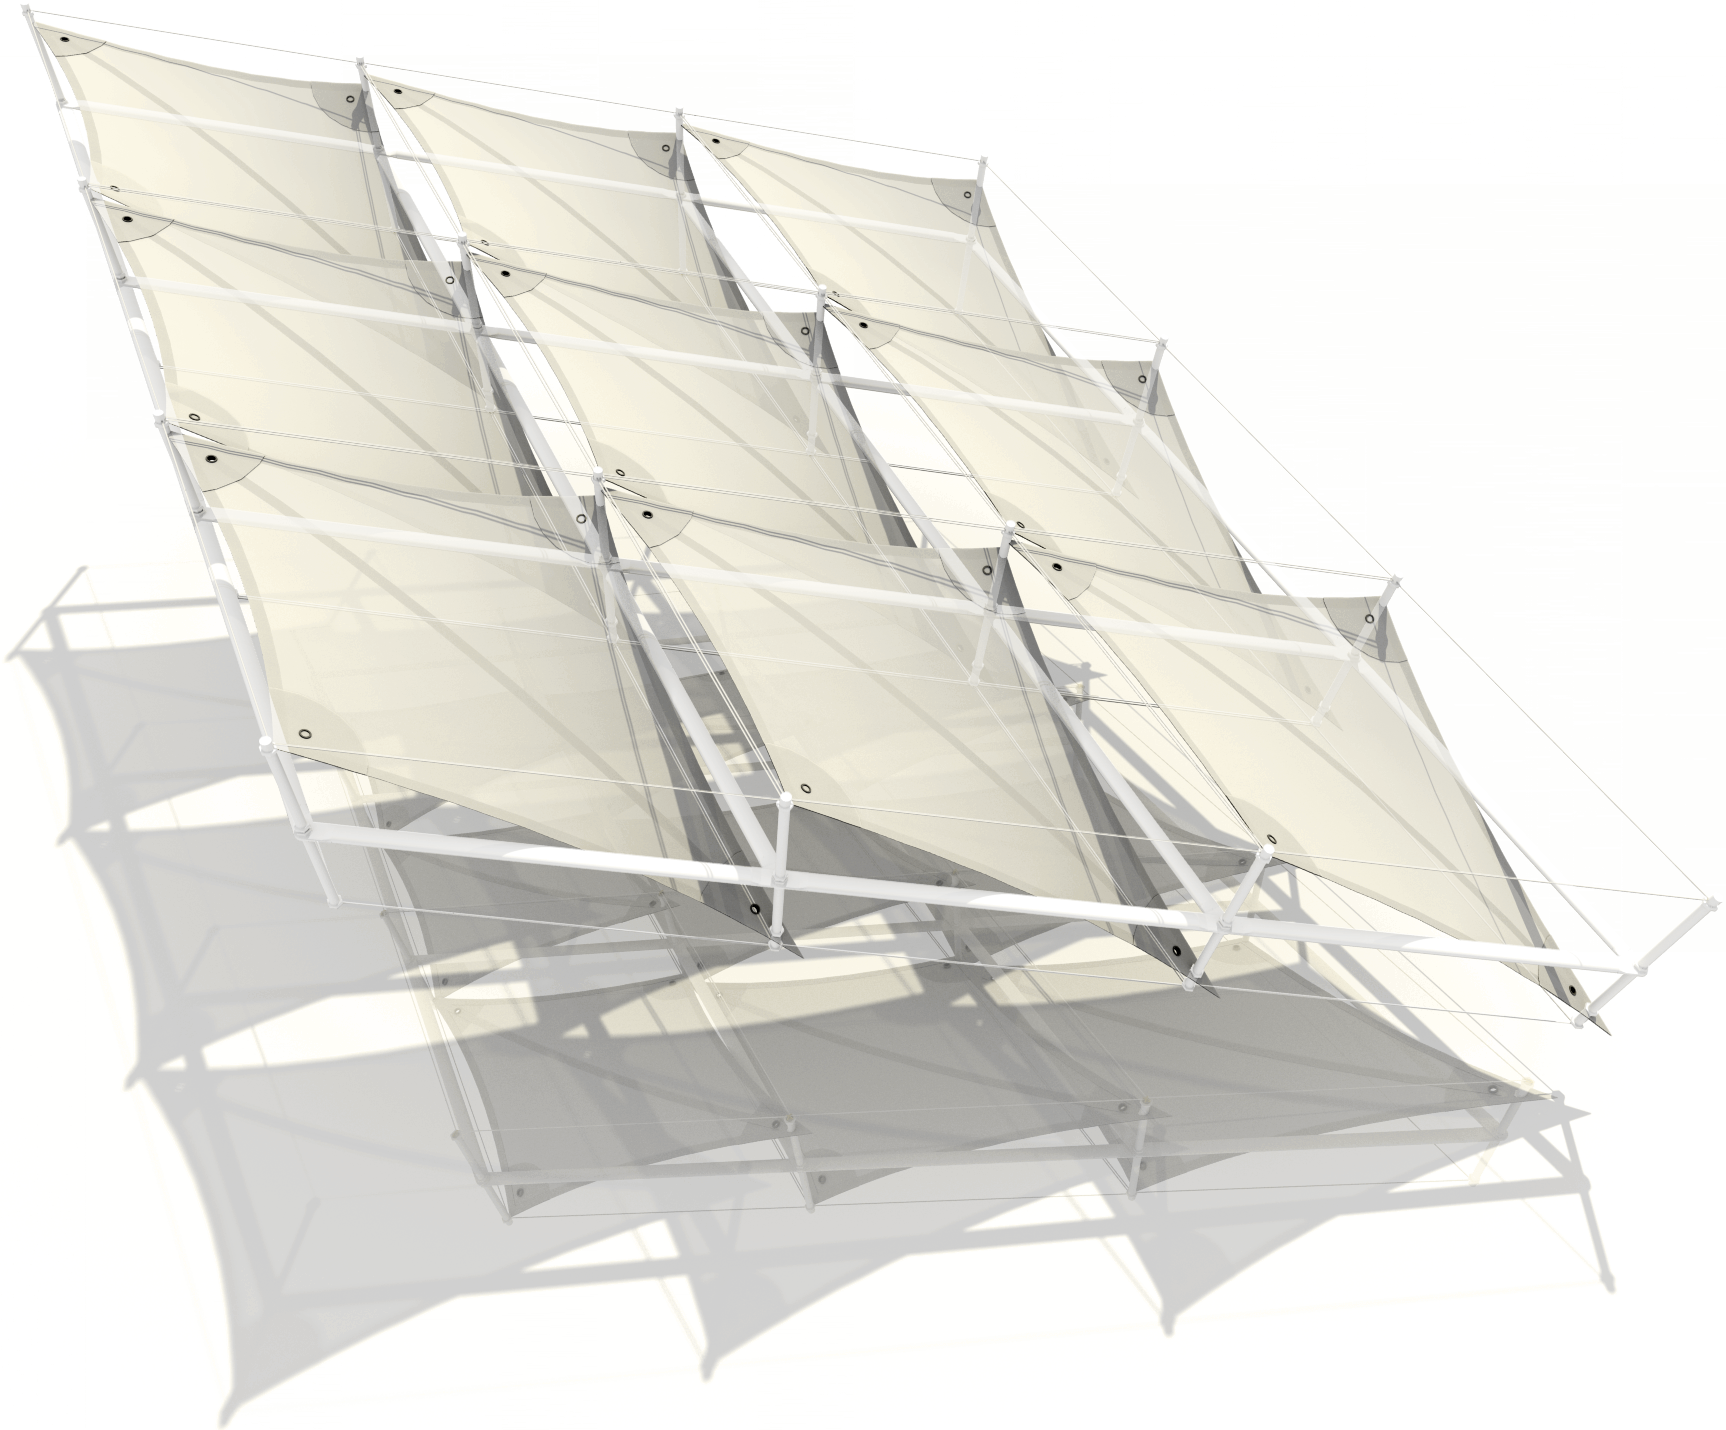 AA Membrane Canopy 3D Render